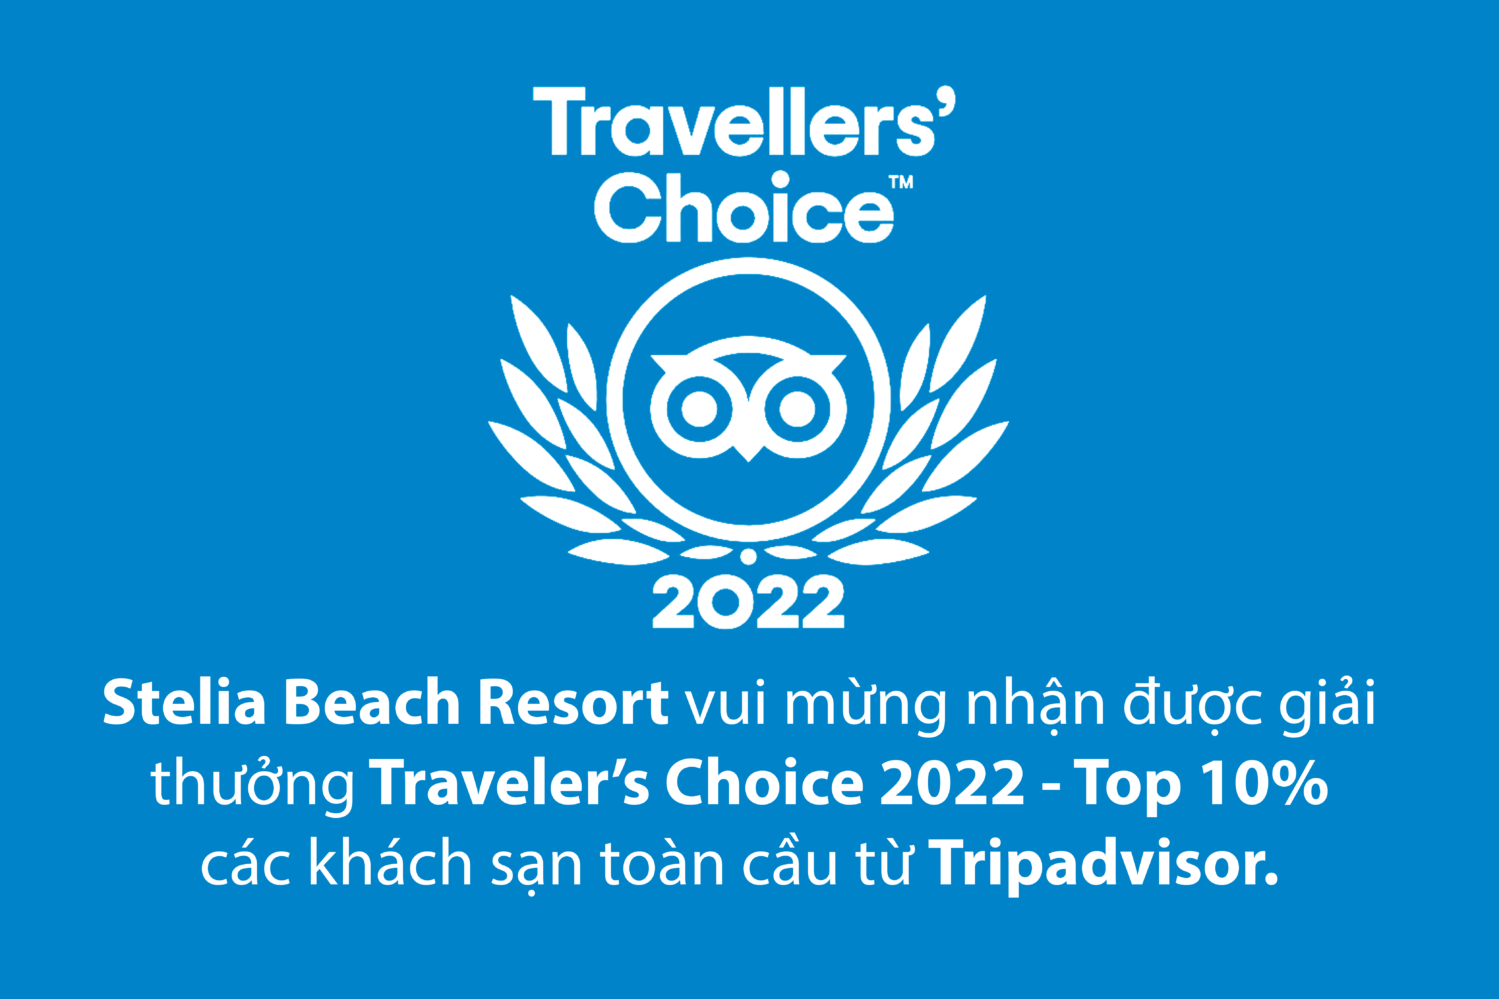 travelers choice